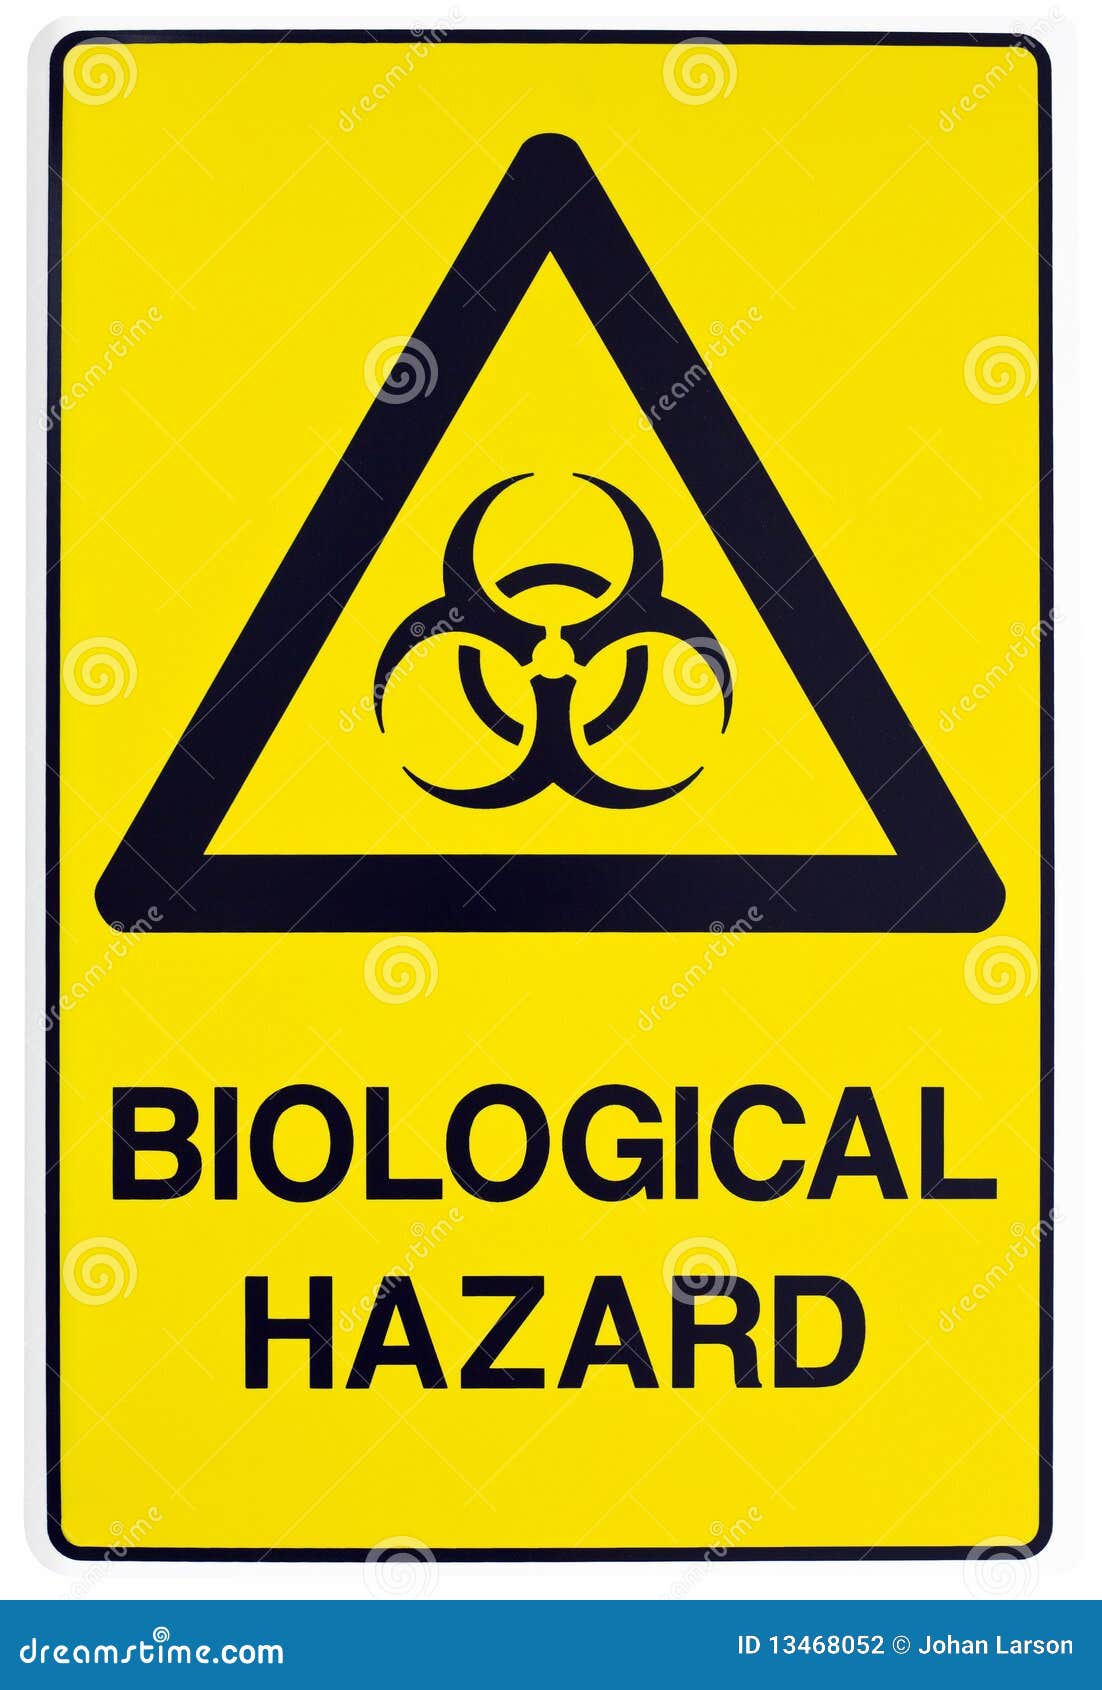 biological hazard warning sign